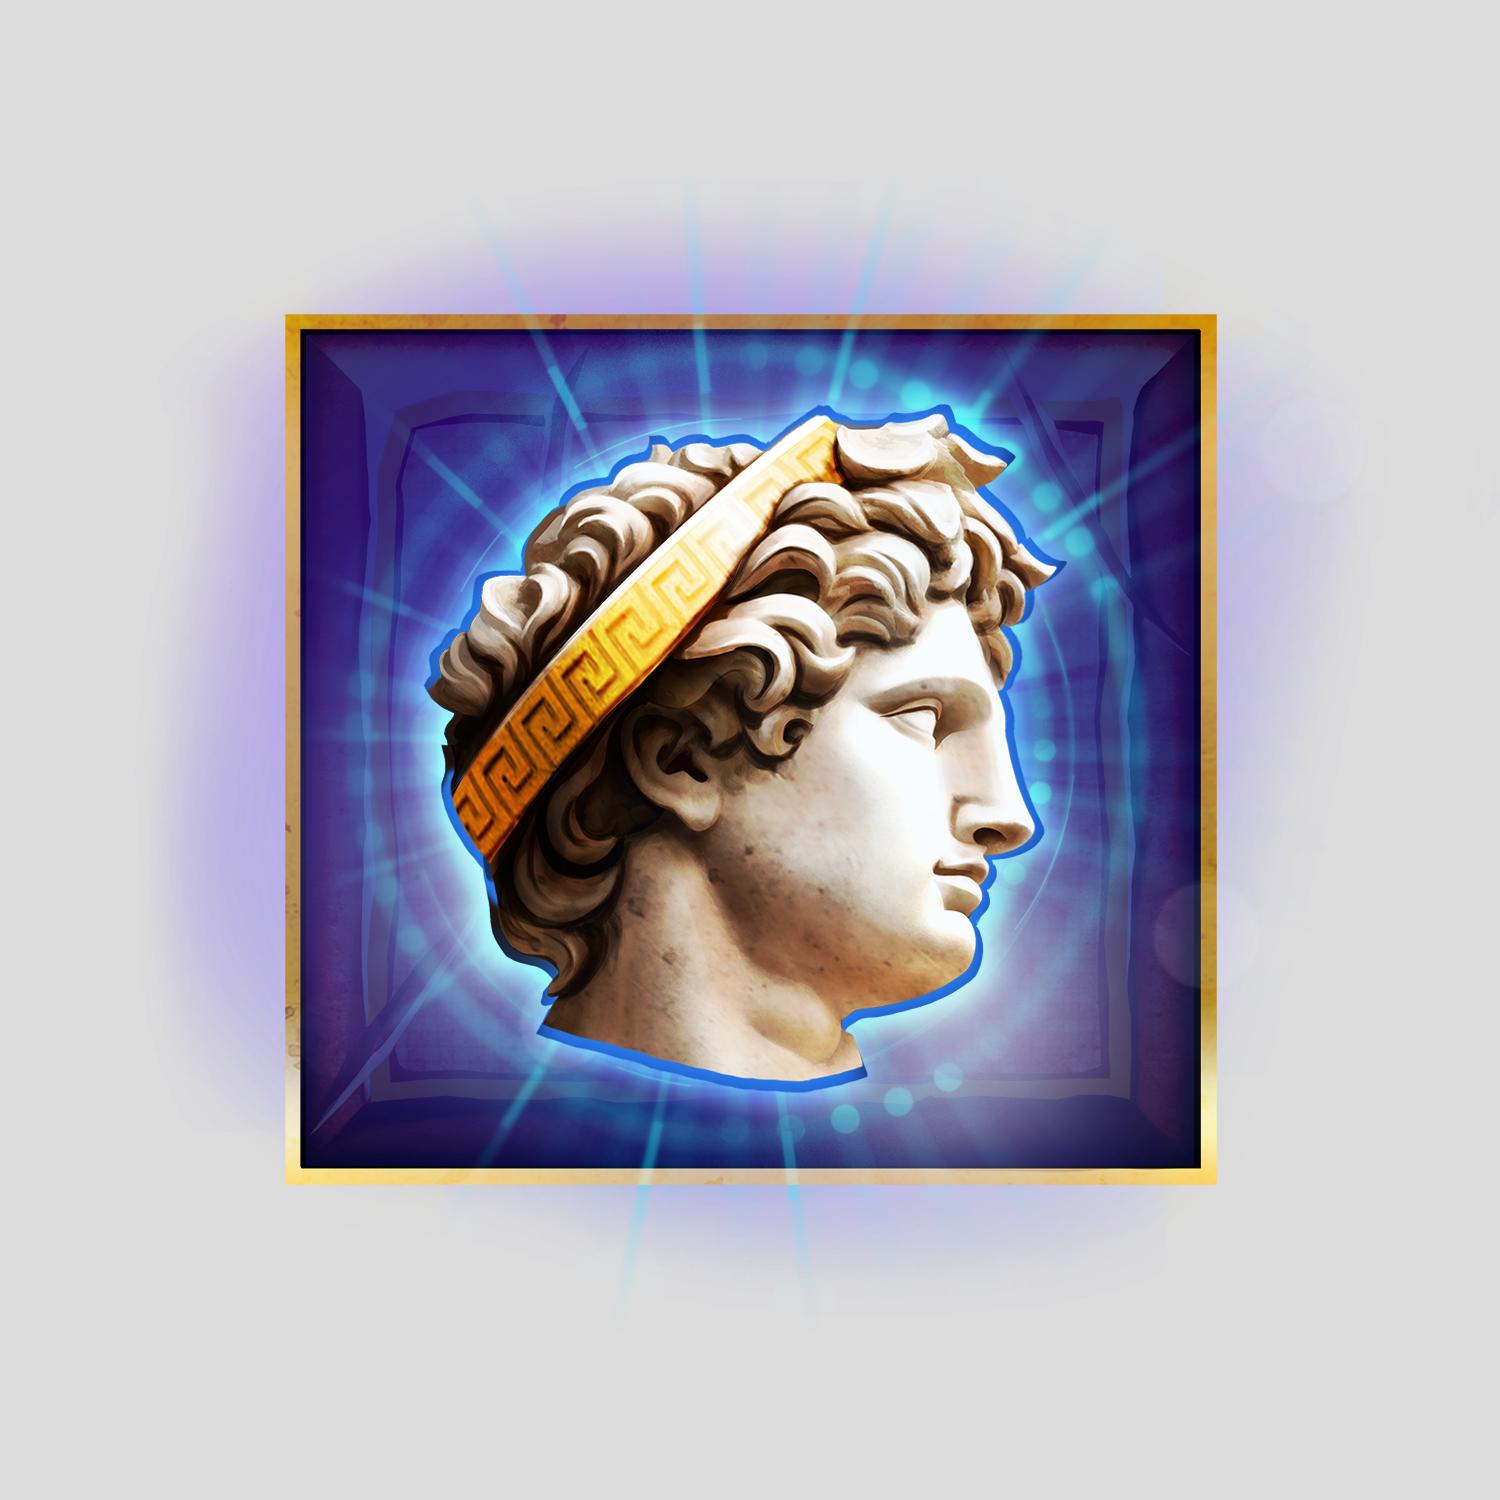 Rise of Zeus | Промо-материалы | Игровой автомат онлайн